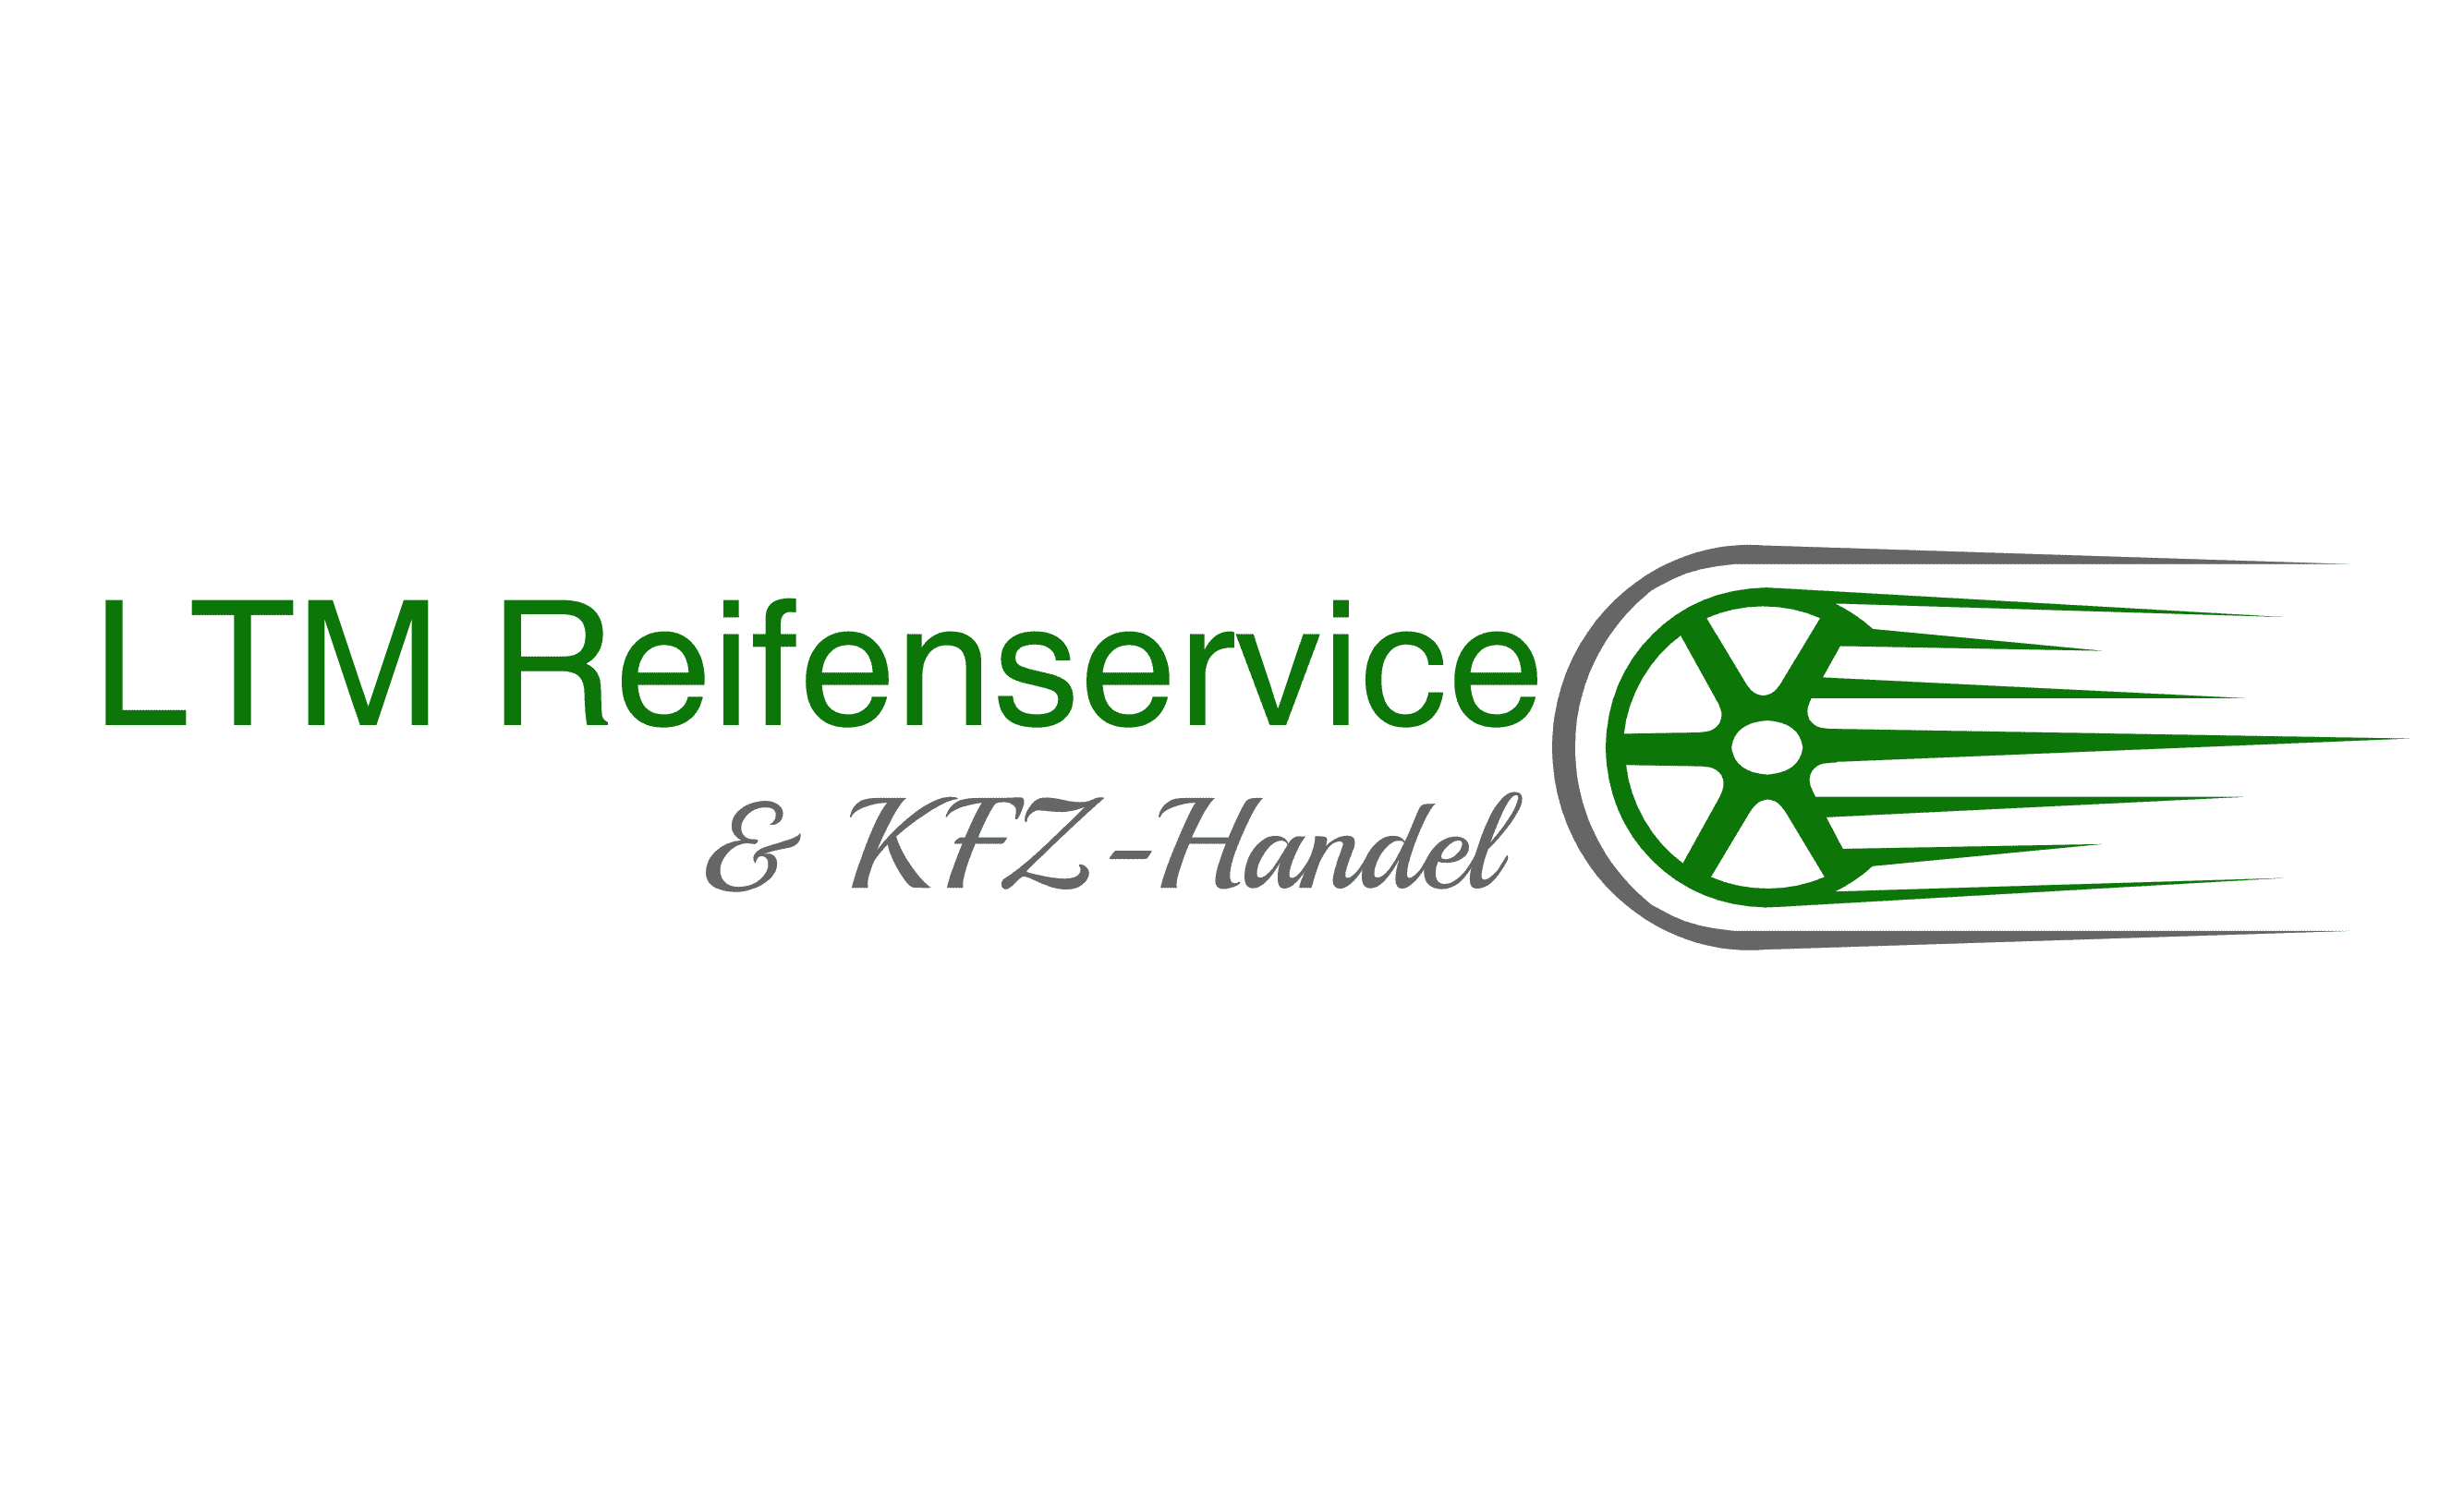 LTM Reifenservice & KFZ-Handel